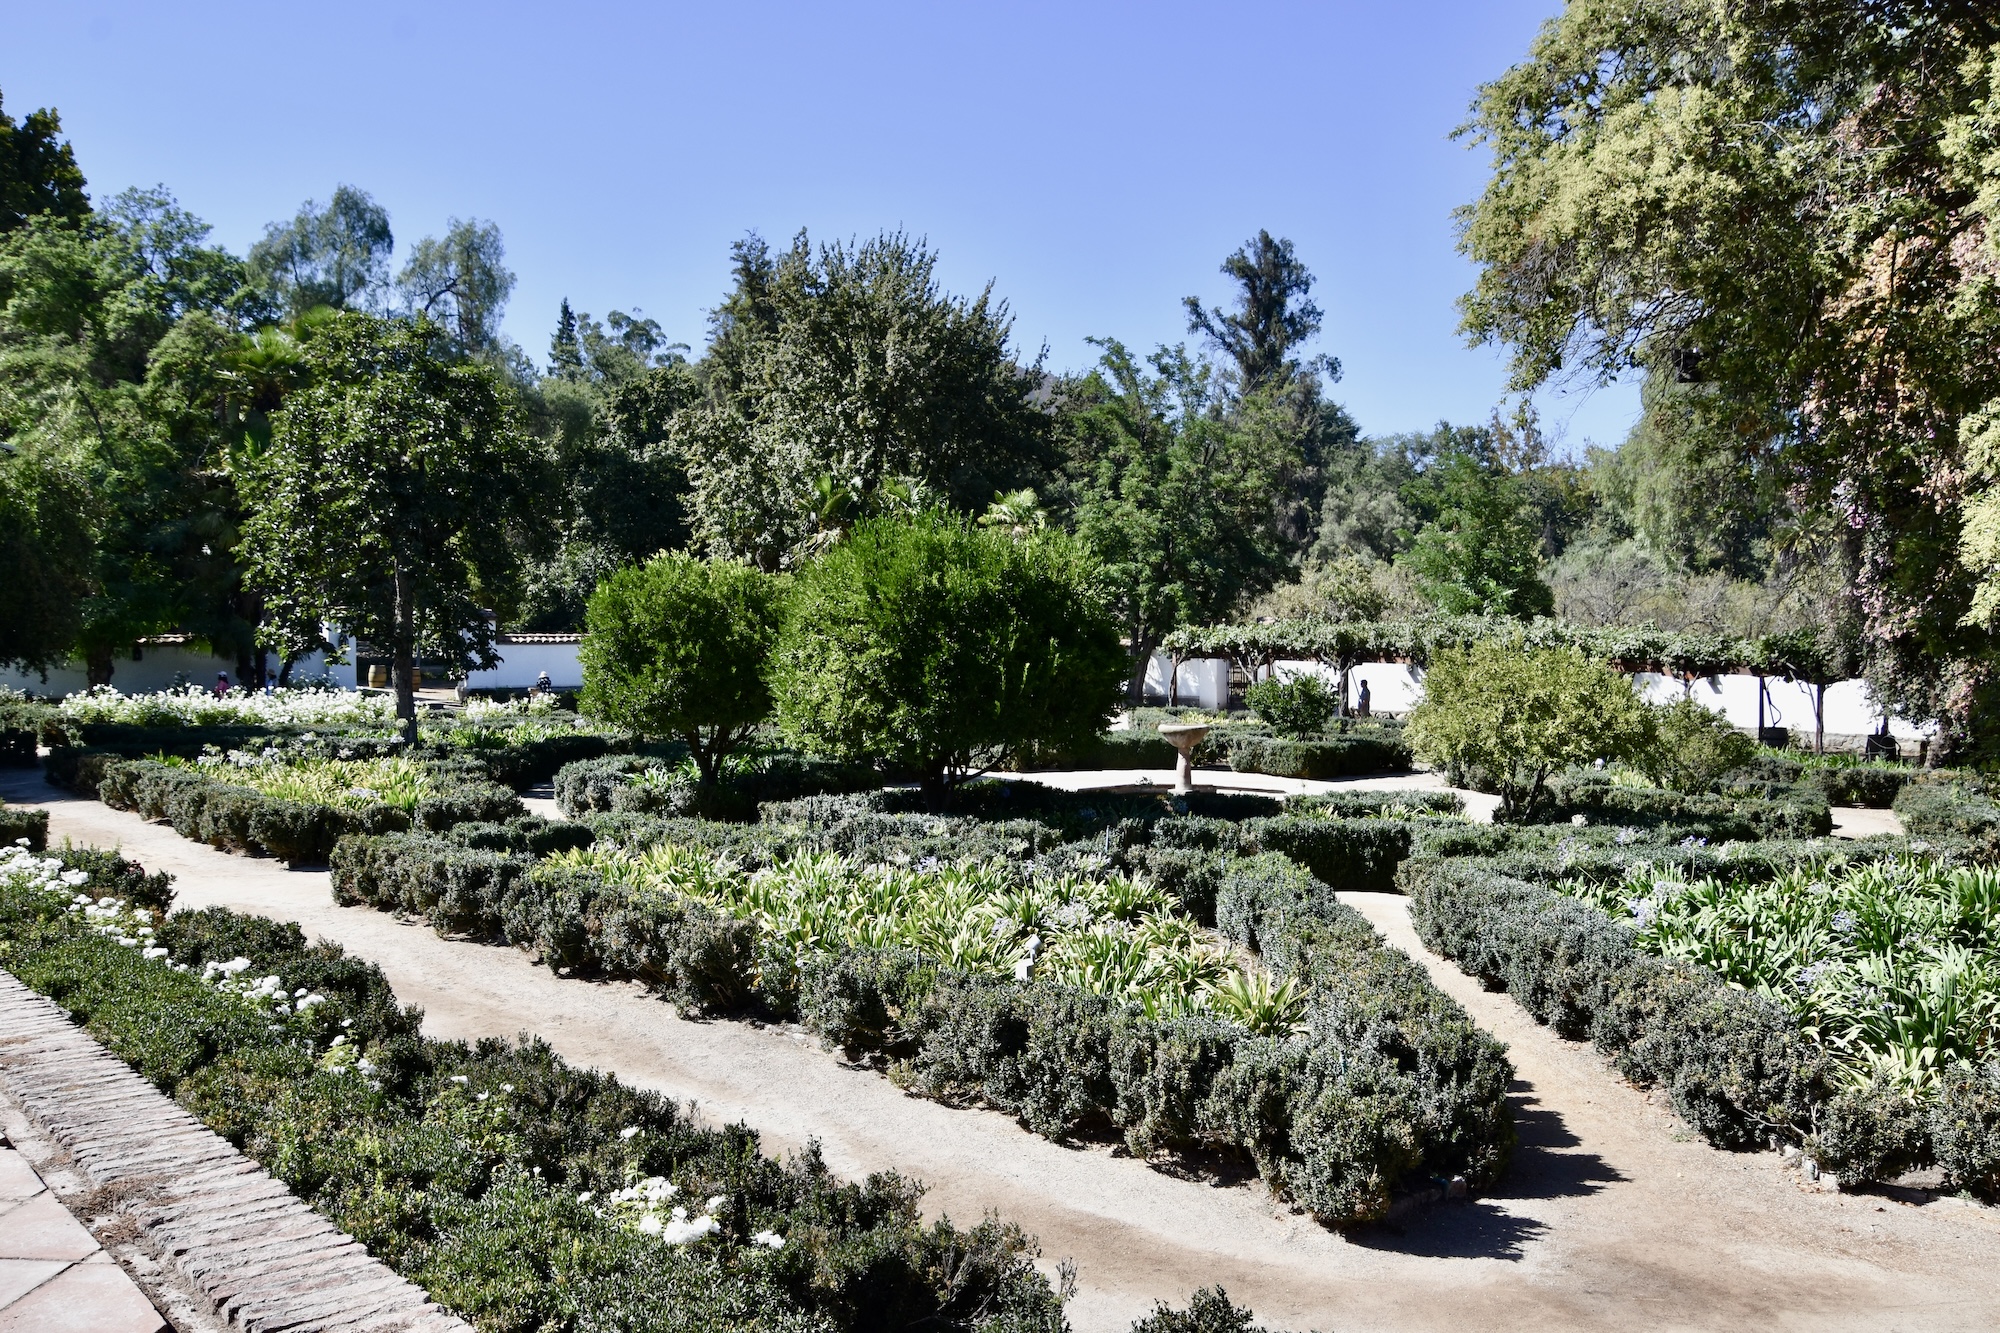 Winery Gardens, Vina Santa Rita